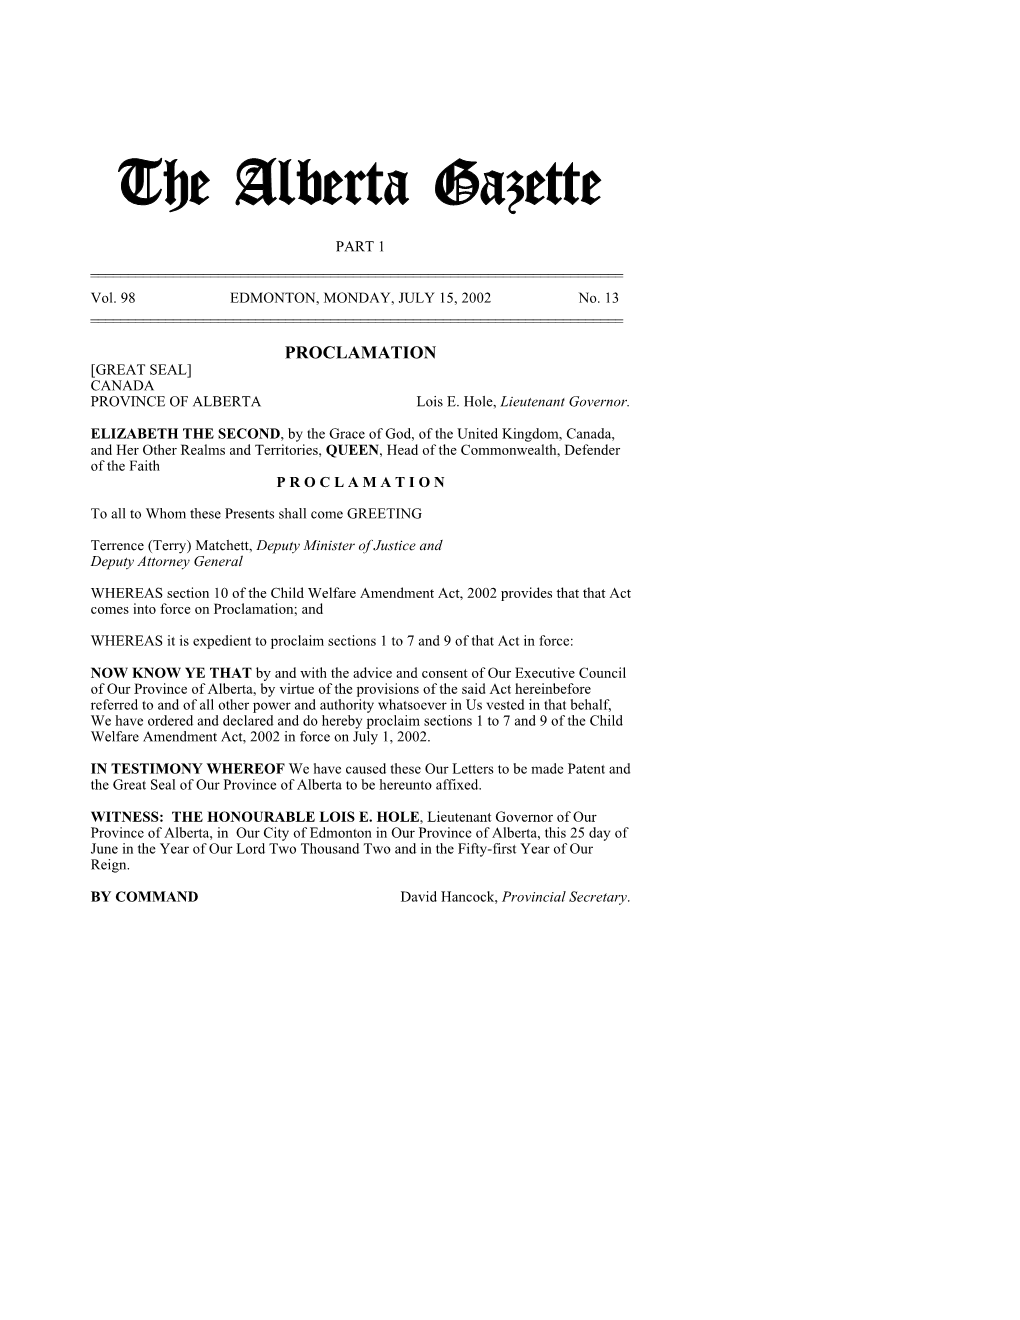 The Alberta Gazette, Part I, July 15, 2002